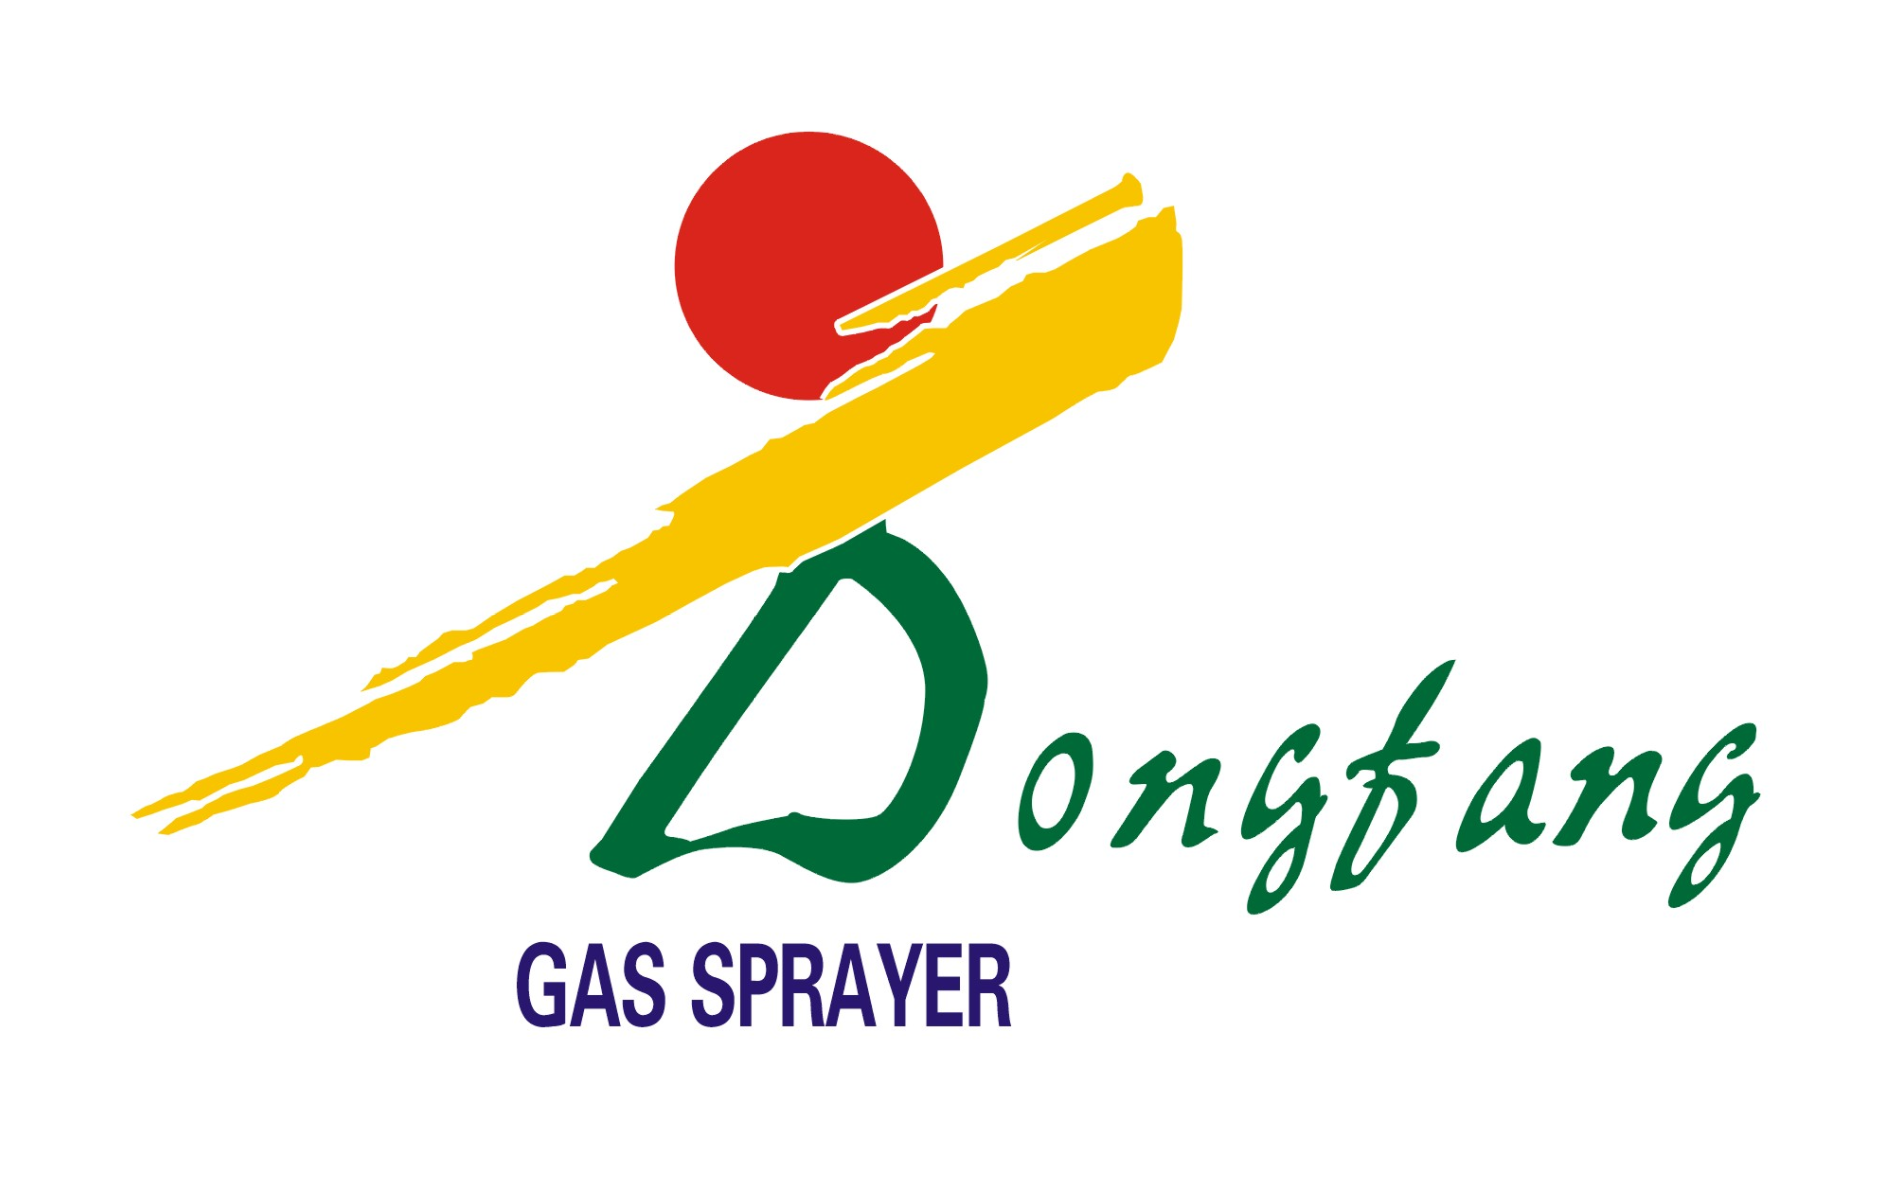 ZHOUSHAN DONGFANG GAS SPRAYER CO.,LTD